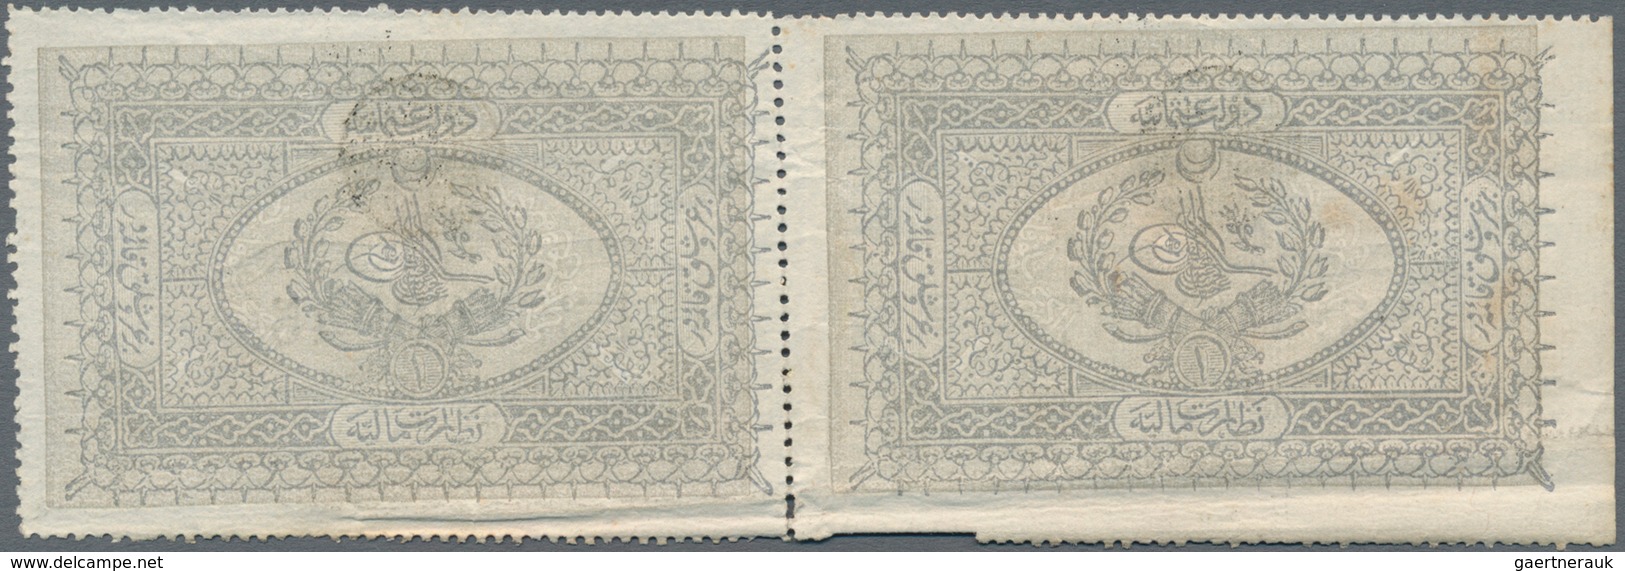 Turkey / Türkei: Banque Impériale Ottomane Uncut Pair Of 1 Kurus AH 1293-1295 (1876-78), P.46, Stain - Turquie